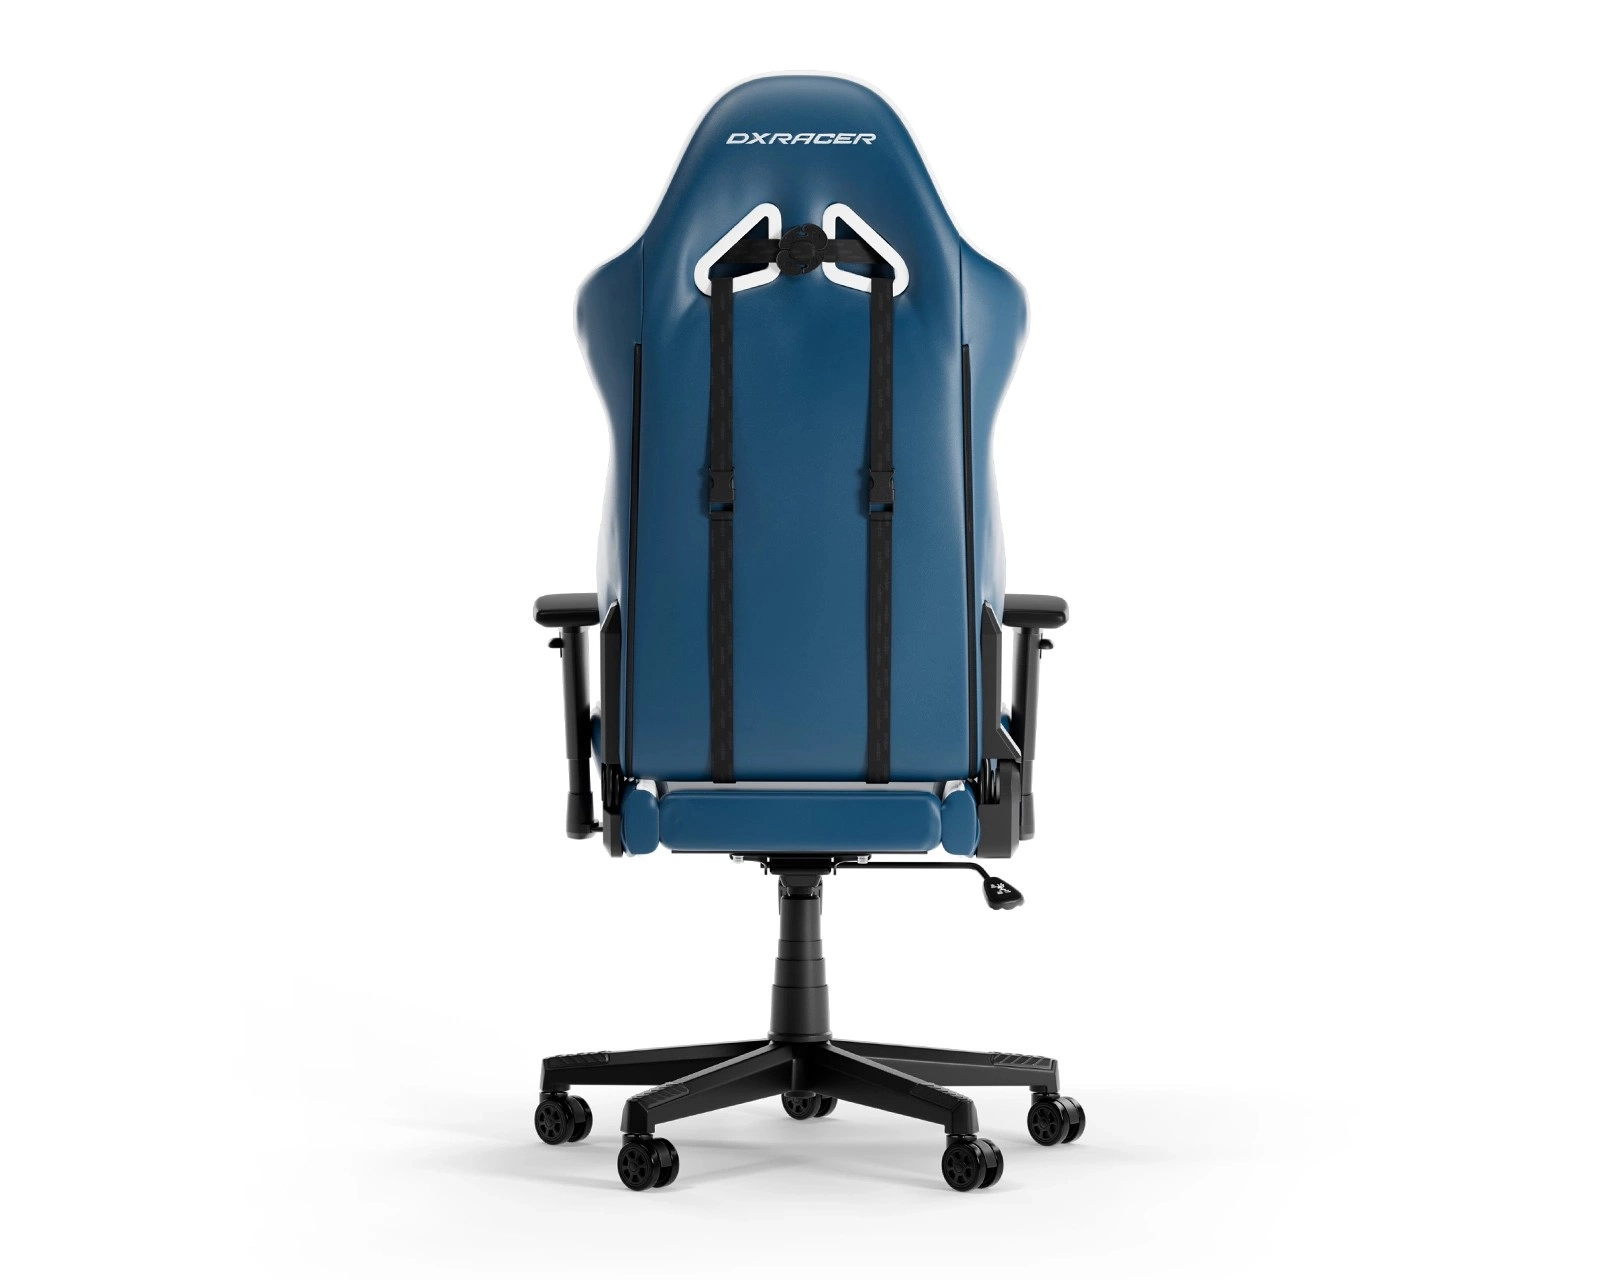 Fotoliu Gaming Chairs DXRacer GLADIATOR-23-L / 150kg / 180-200cm / Blue/White